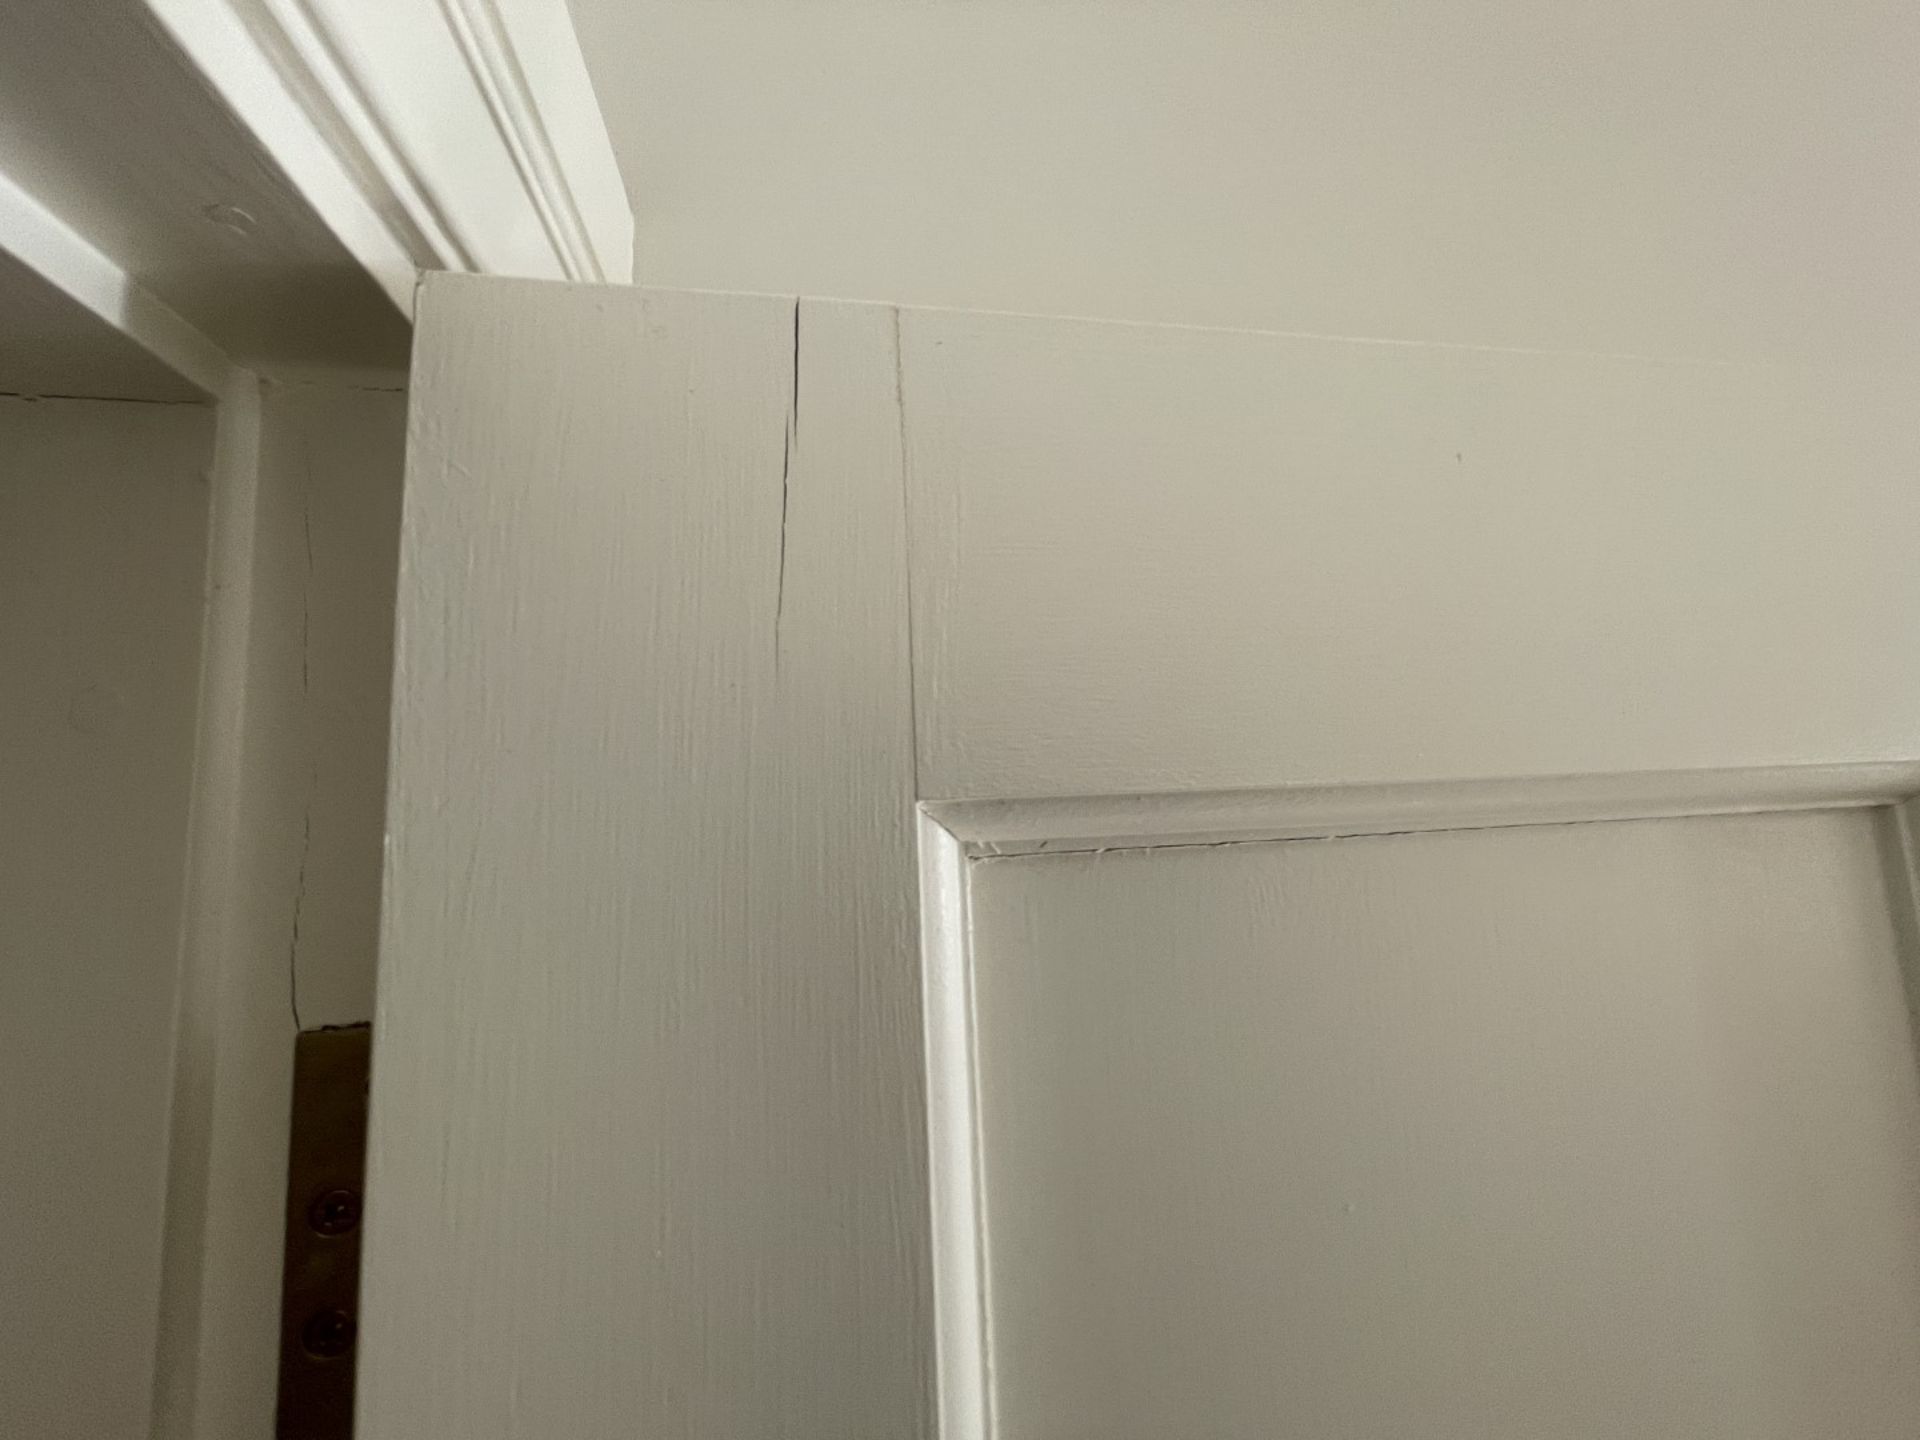 1 x Solid Wood Lockable Painted Internal Bathroom Door in White - Includes Handles and Hinges - Ref: - Image 13 of 17